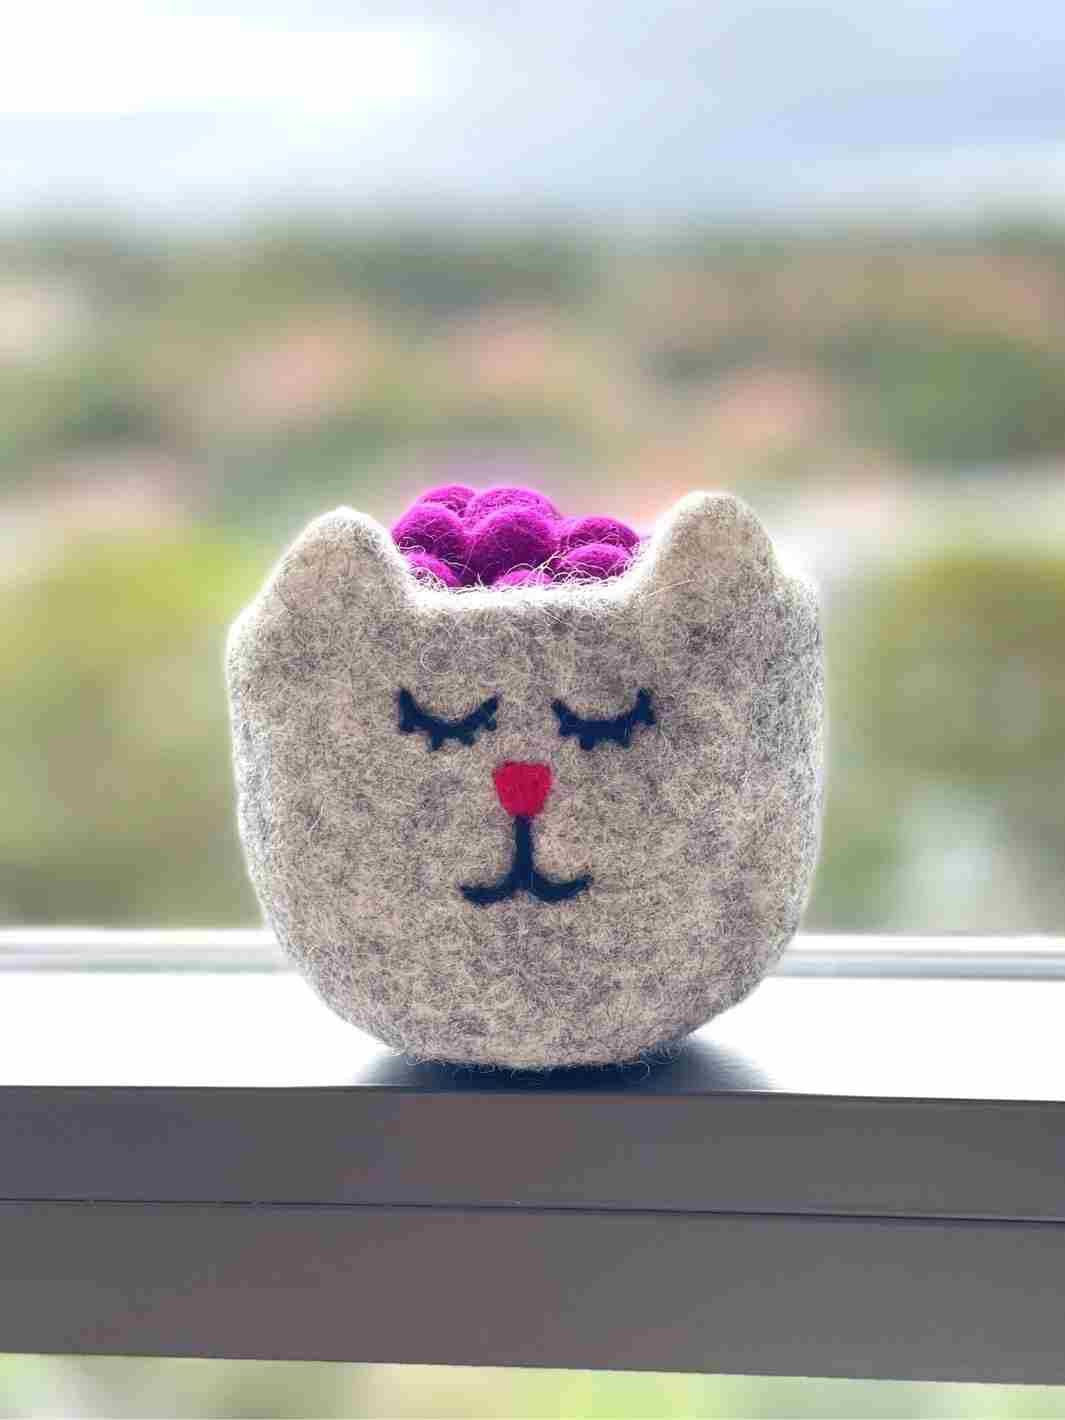 Eco-Friendly Craft Supplies | Wool Felt Balls - 1 cm (Purple) | Eco Dog & Cat 